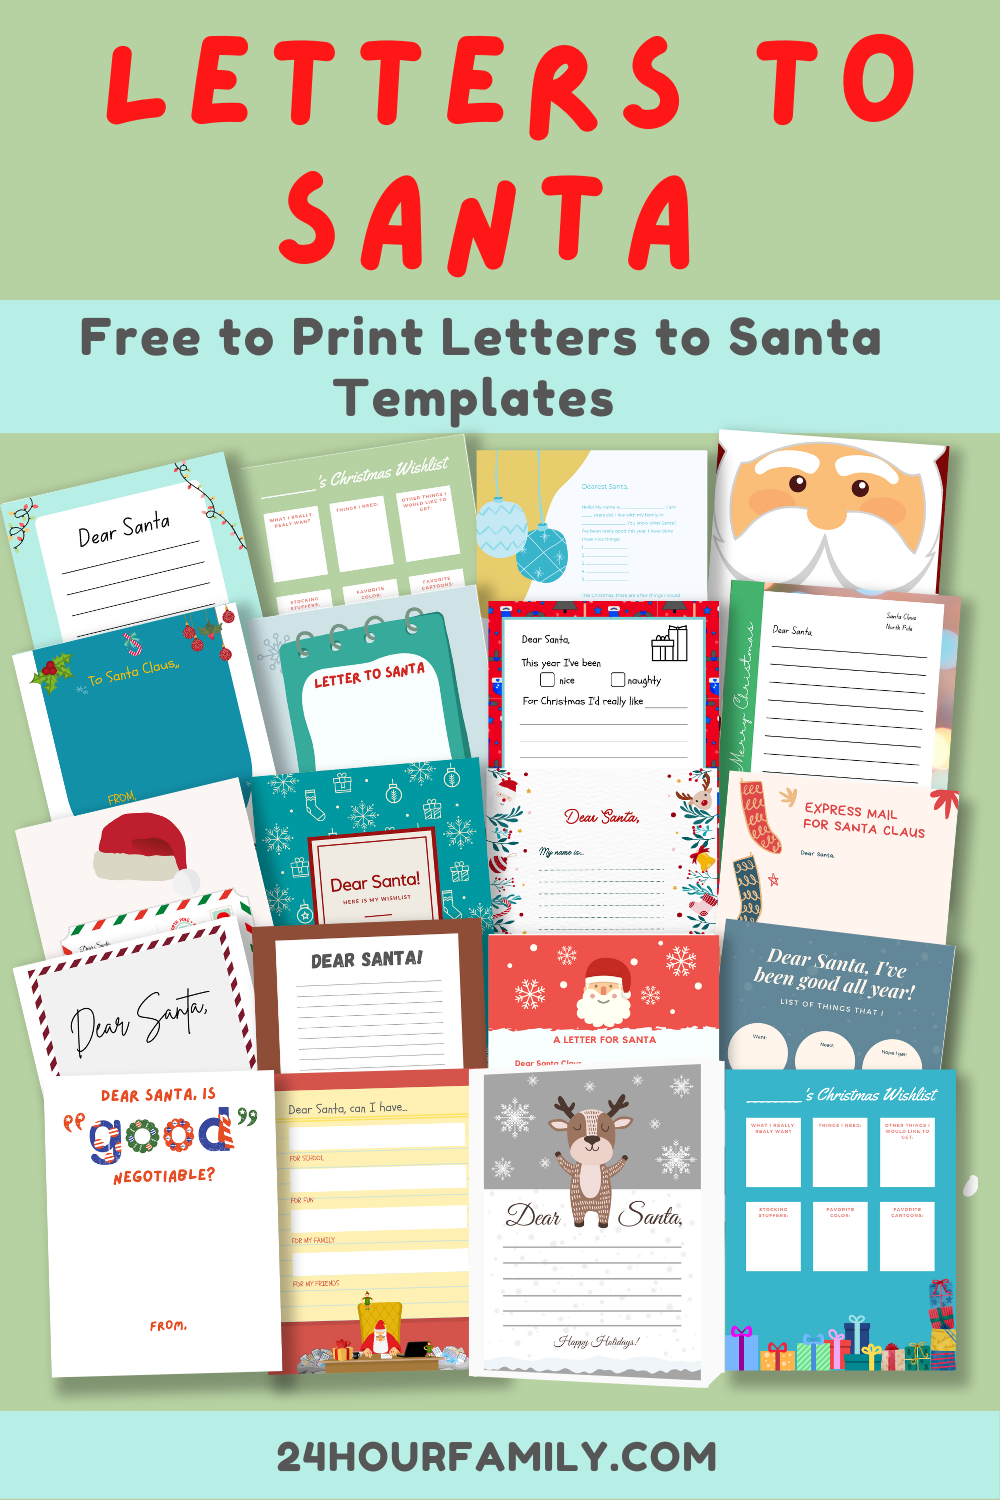 45 + Free Dear Santa Letter Templates for Kids